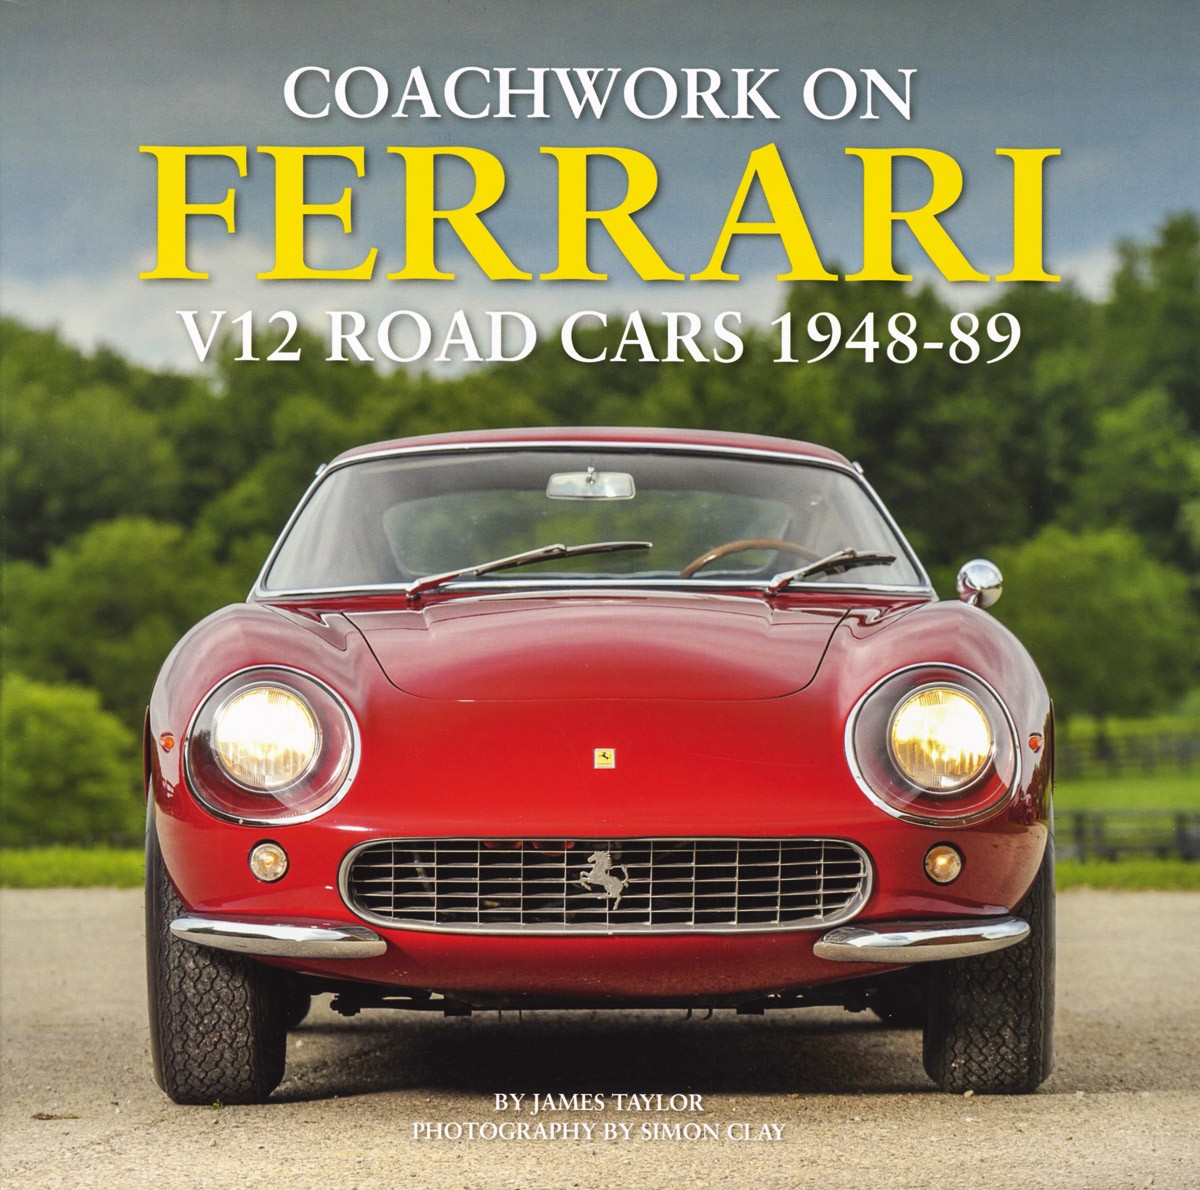 Coachwork on Ferrari V12 road cars 1948-89